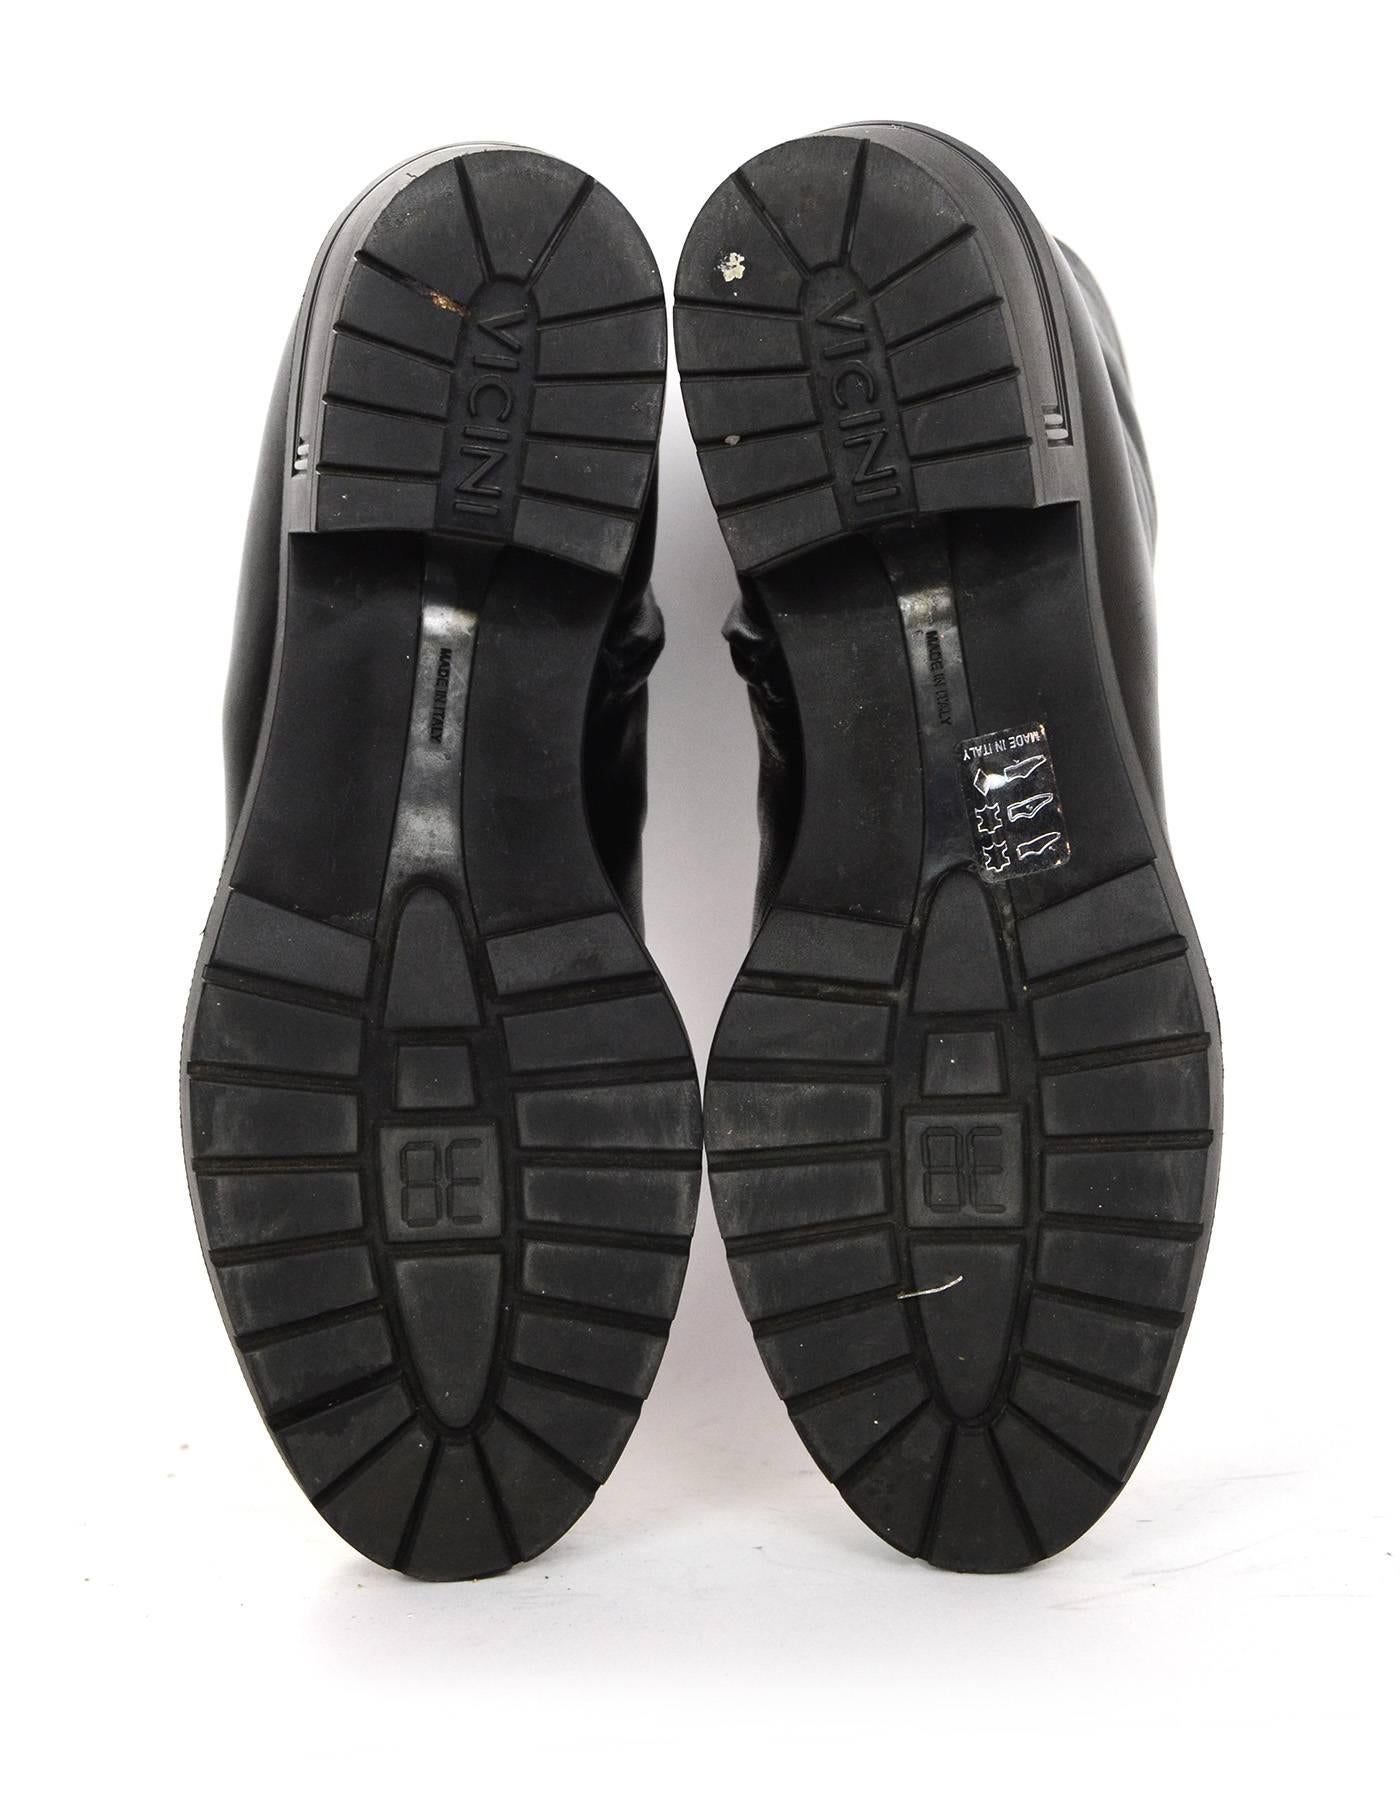 Giuseppe Zanotti Black Leather Ankle Boots Sz 38 1